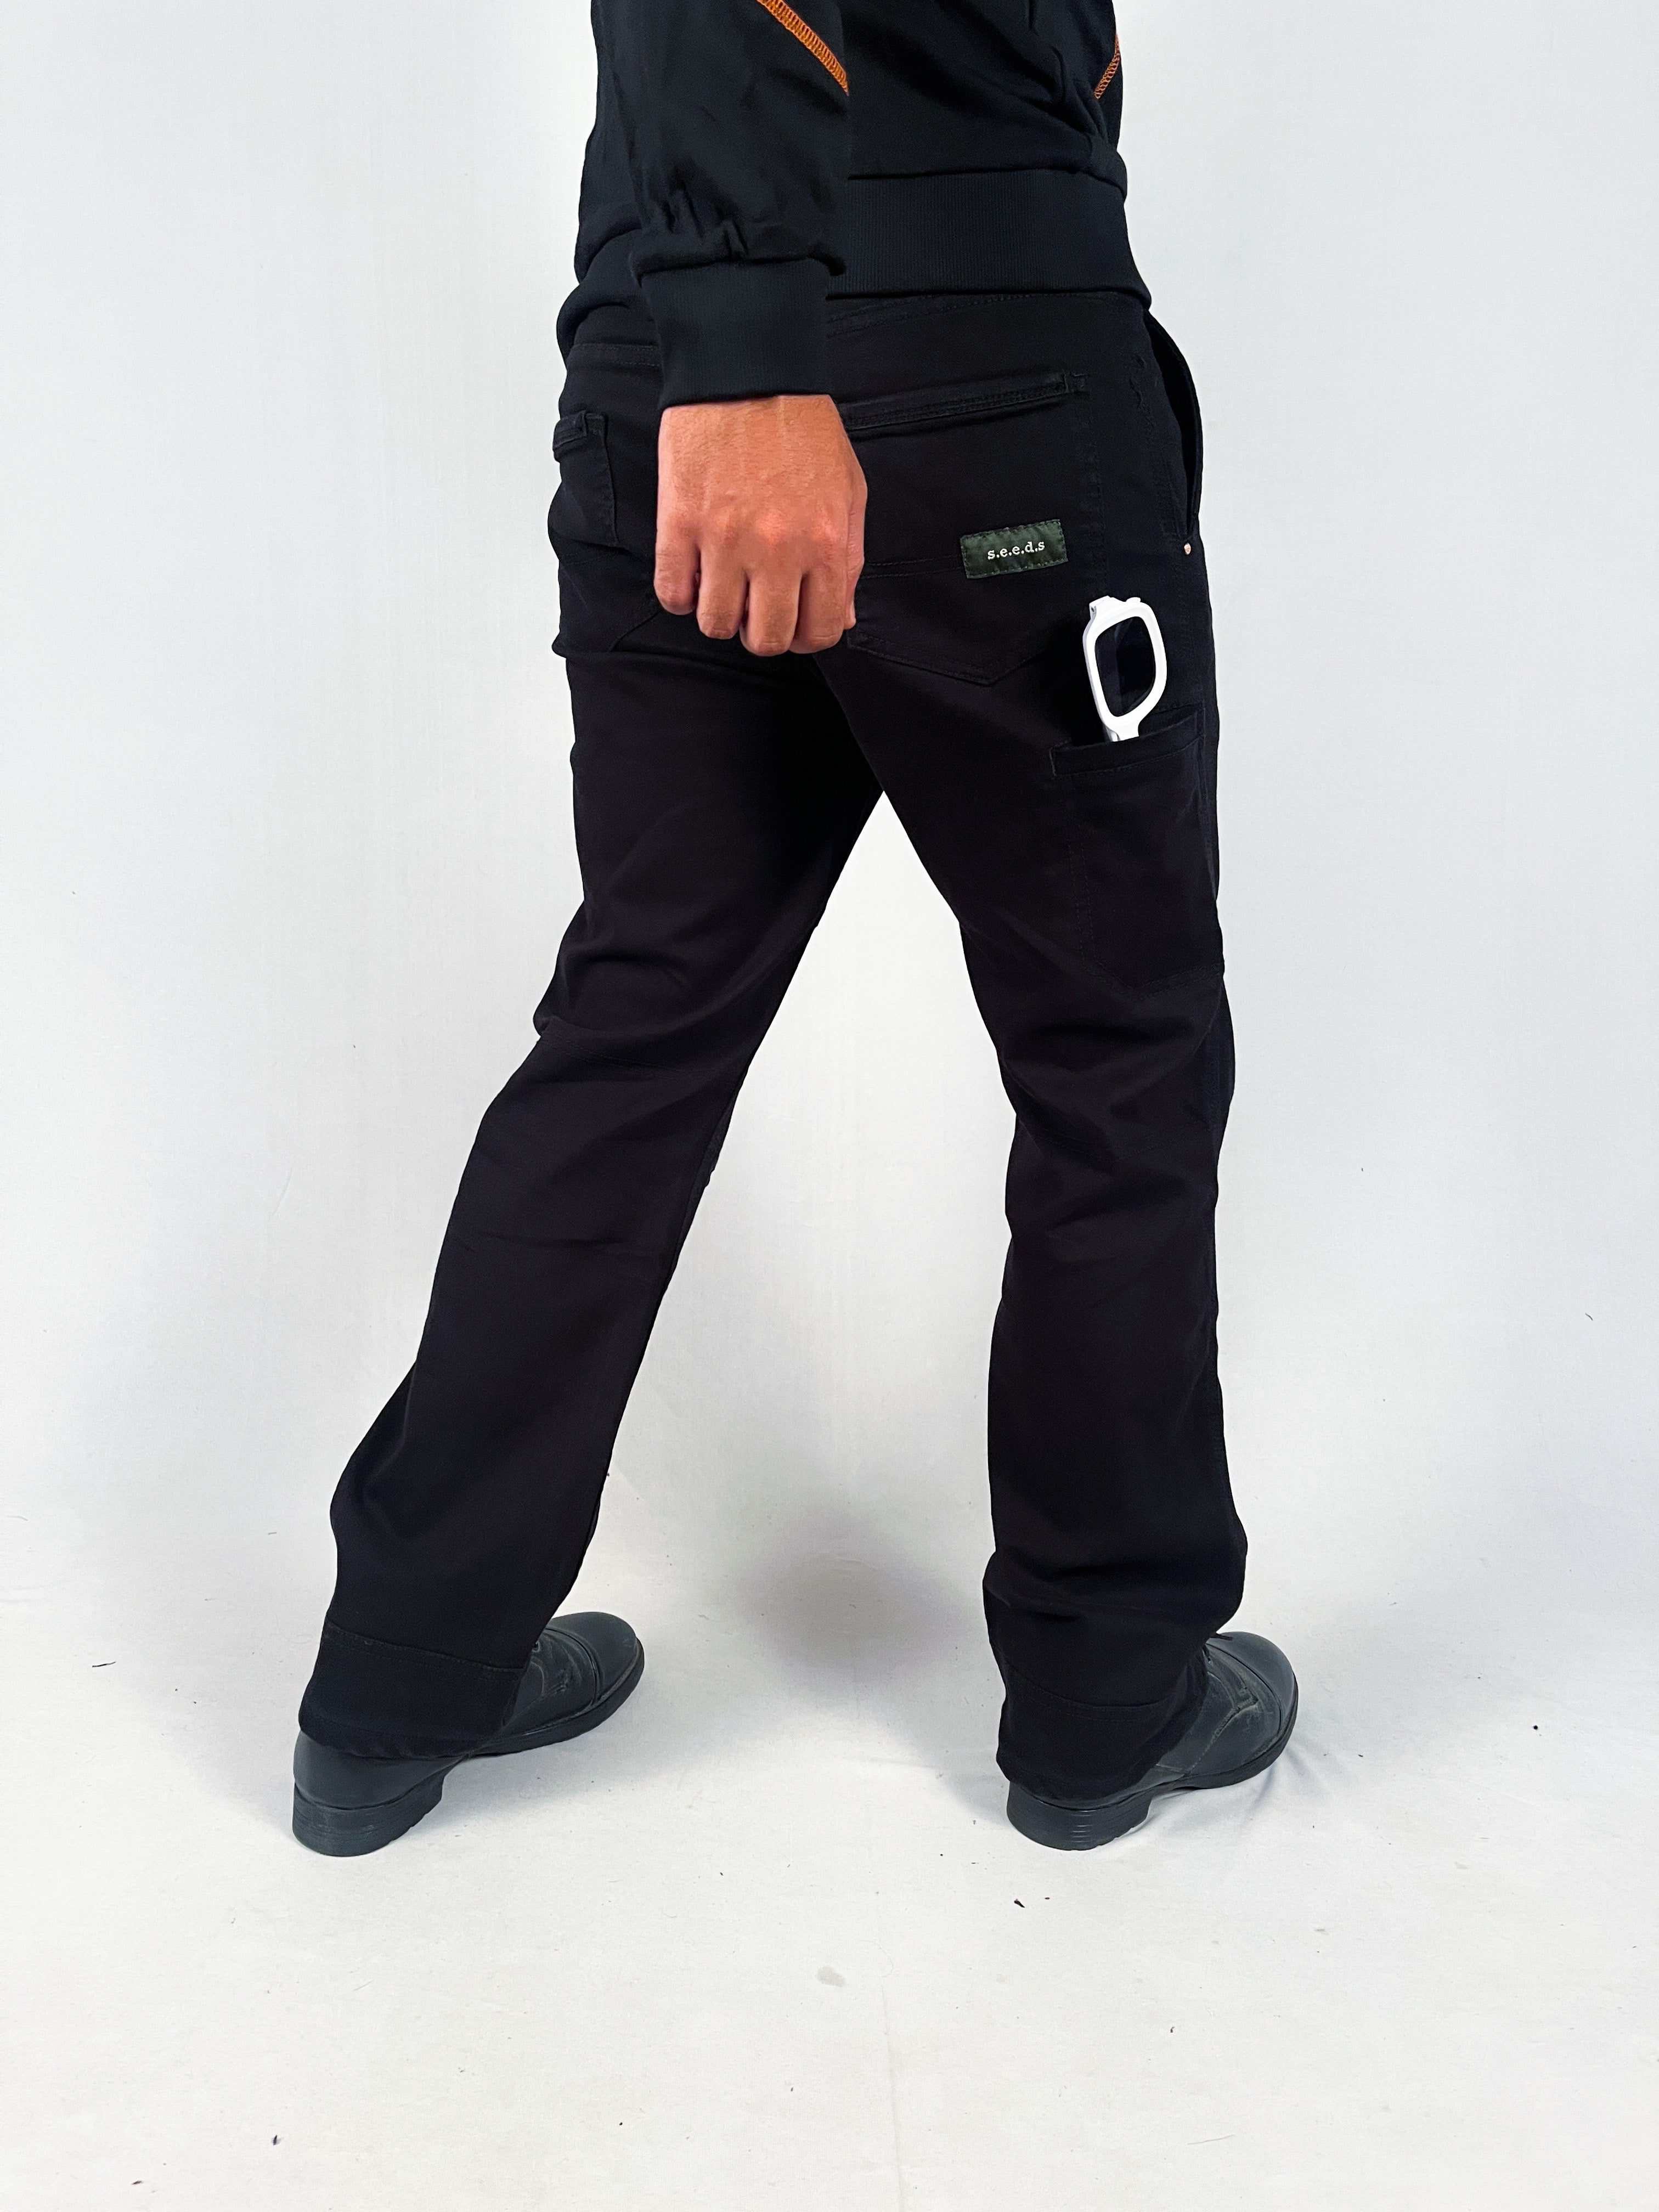 Seed Yoga  Hemp Yoga Pants by Blake Ward  Kickstarter